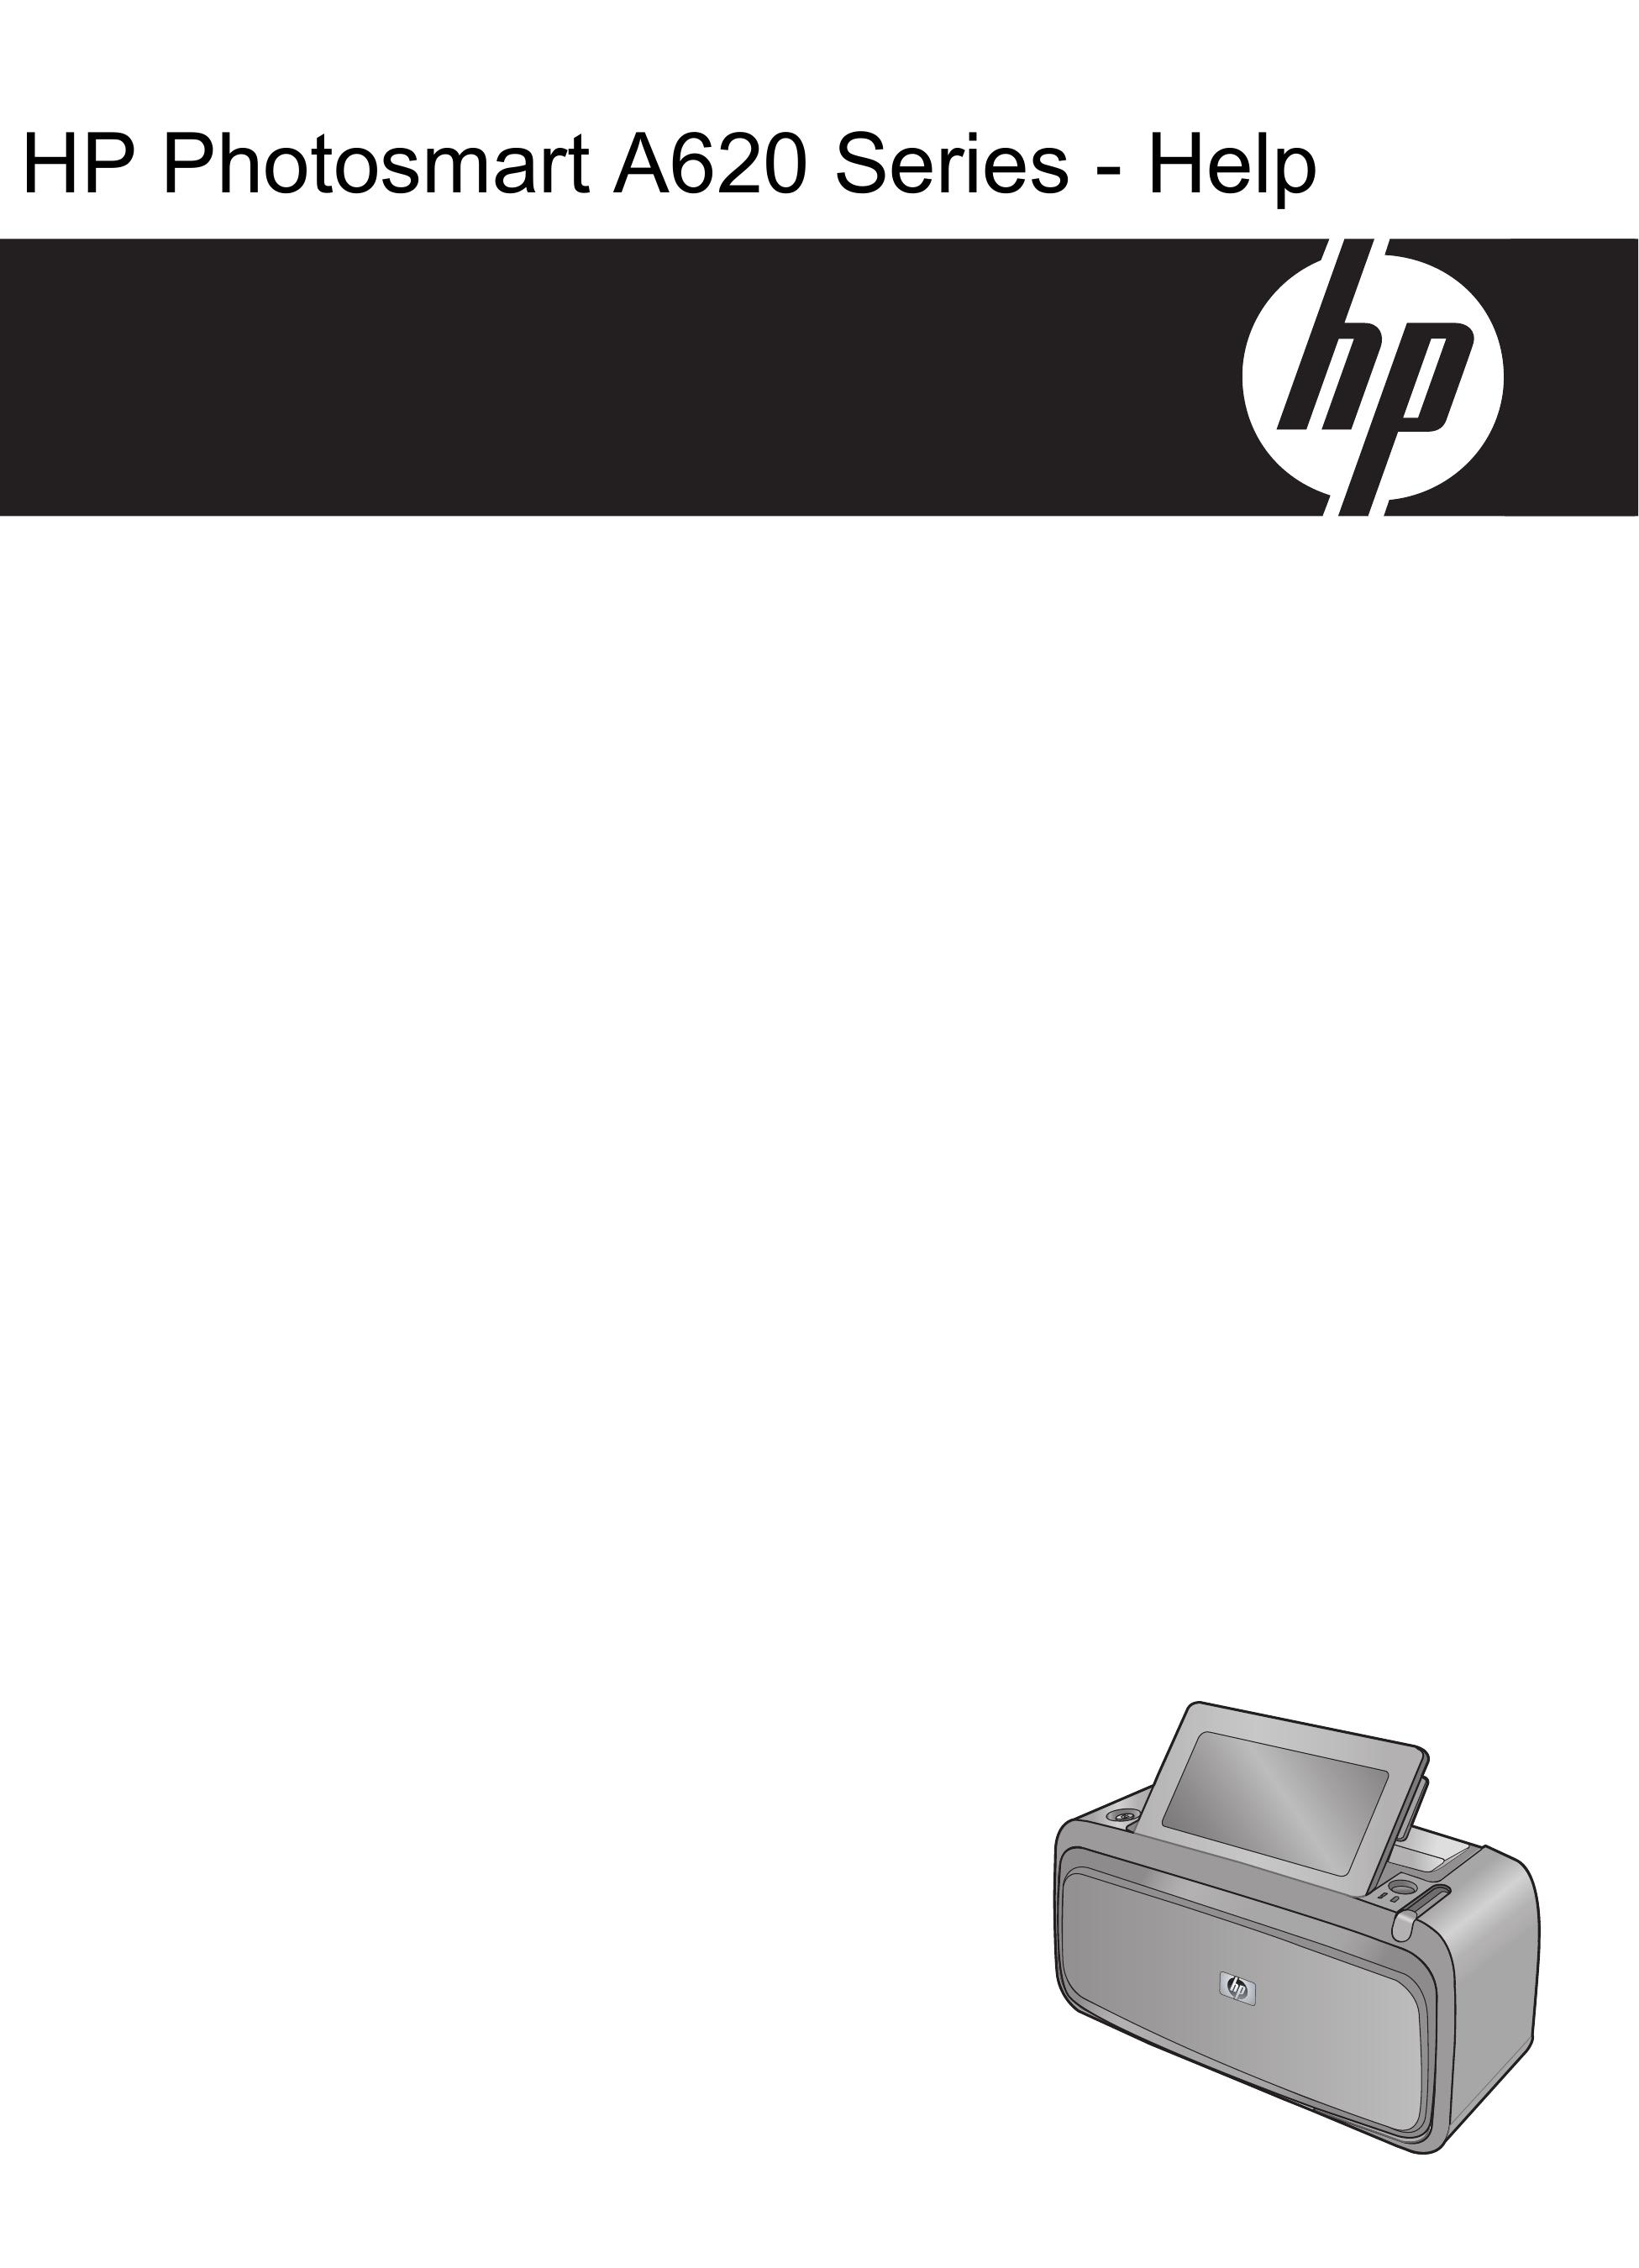 HP (Hewlett-Packard) A620 Series Photo Printer User Manual